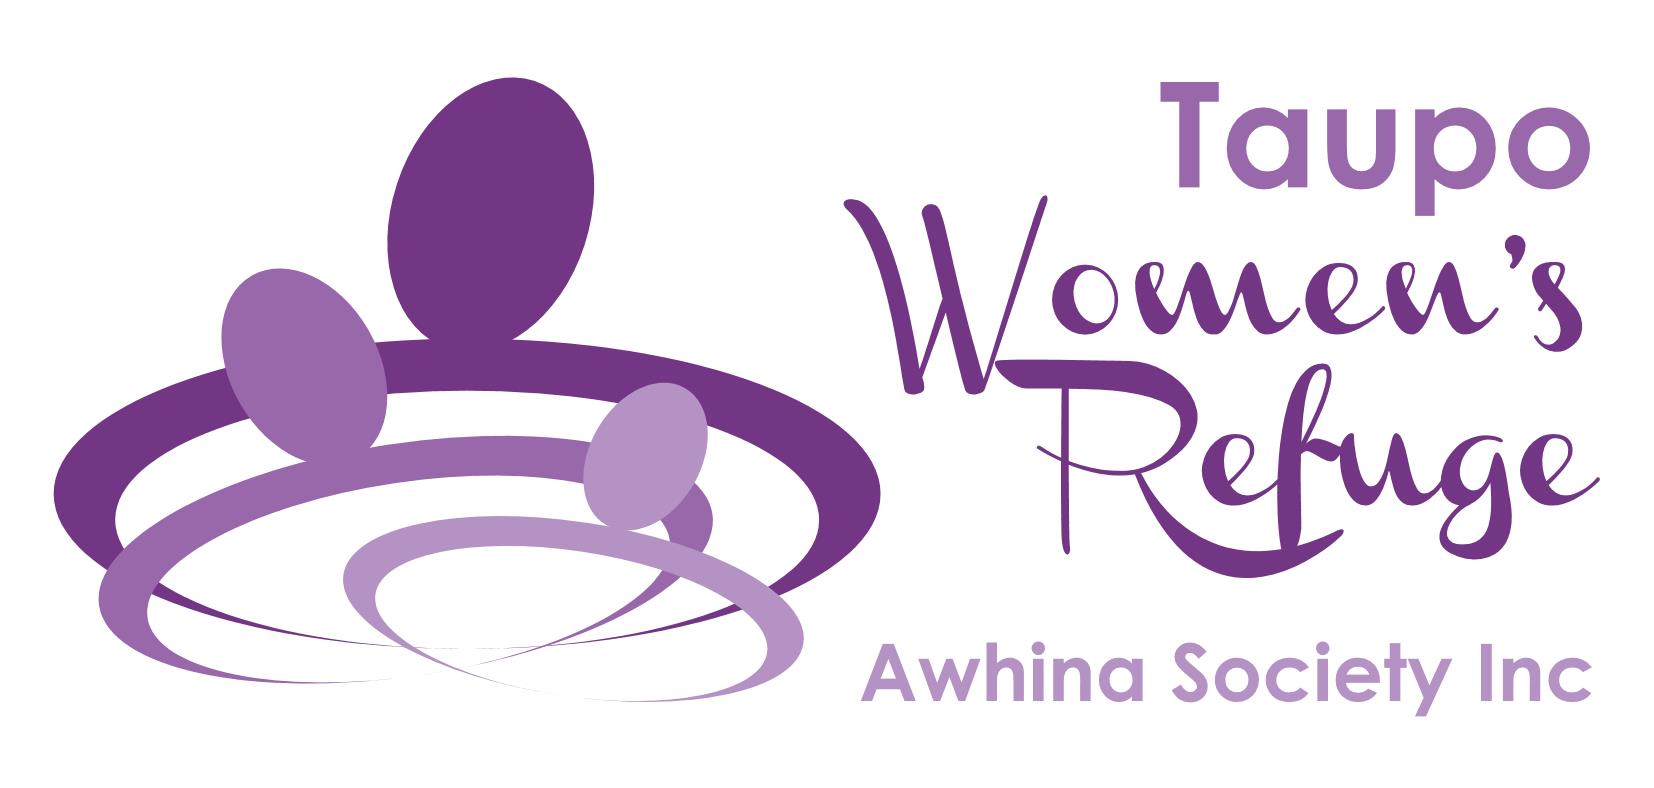 Awhina Society Inc. logo